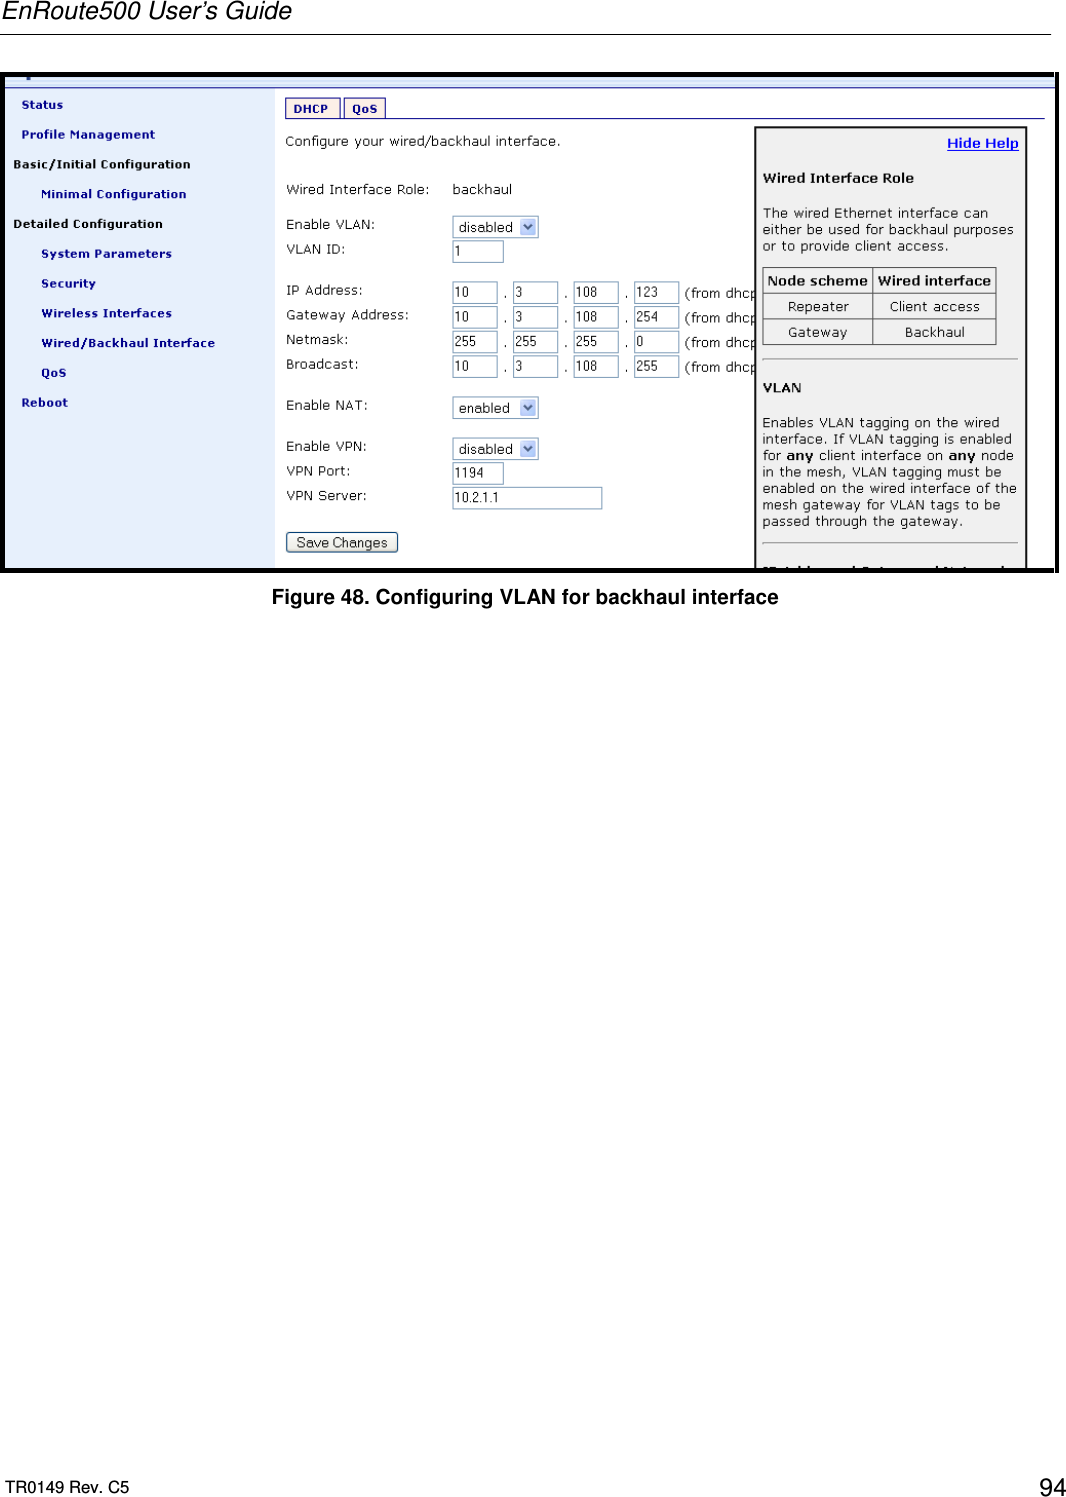 EnRoute500 User’s Guide  TR0149 Rev. C5  94  Figure 48. Configuring VLAN for backhaul interface   